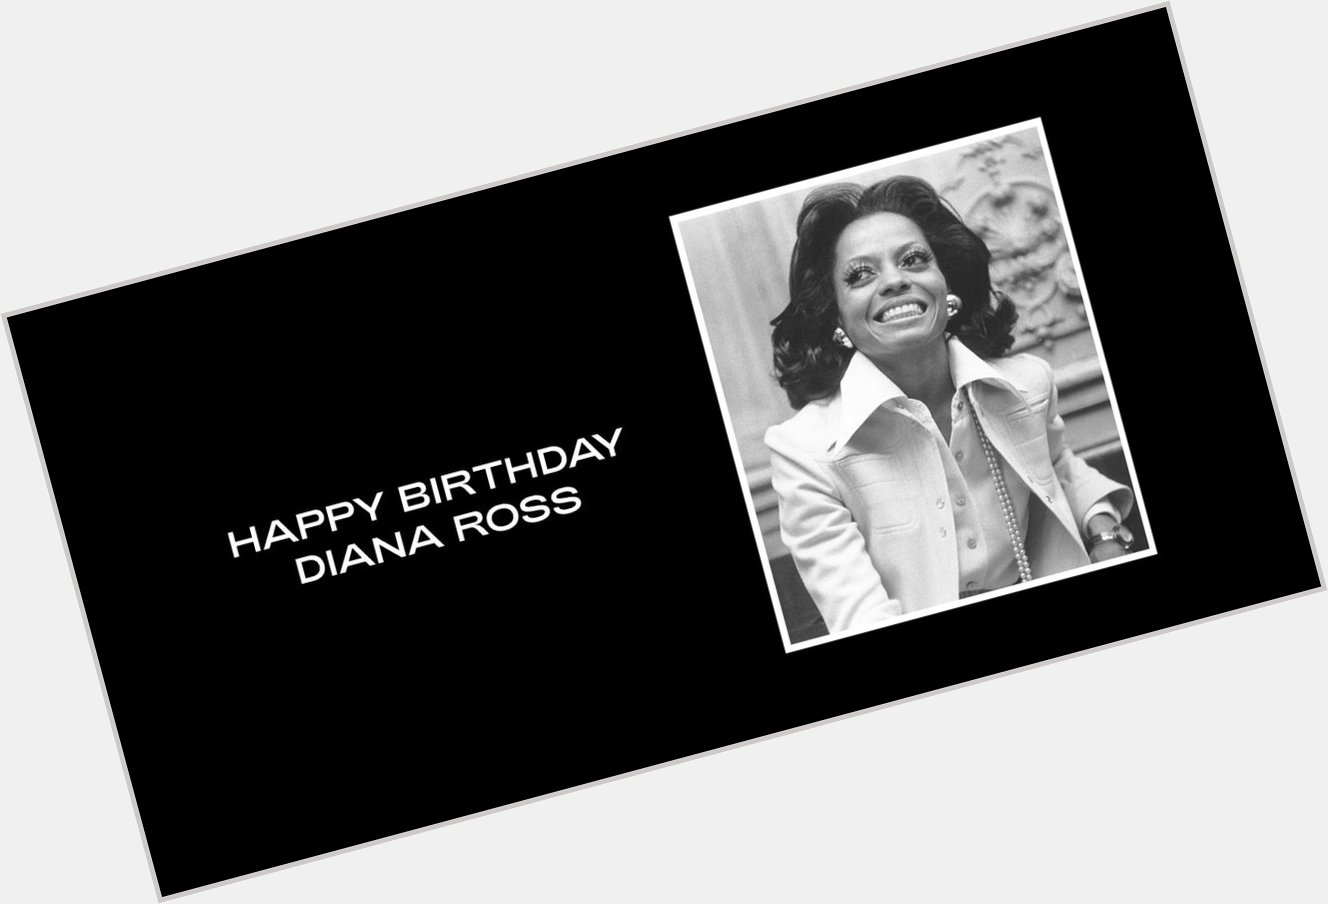  Happy Birthday Diana Ross, Mariah Carey & Halle Bailey  